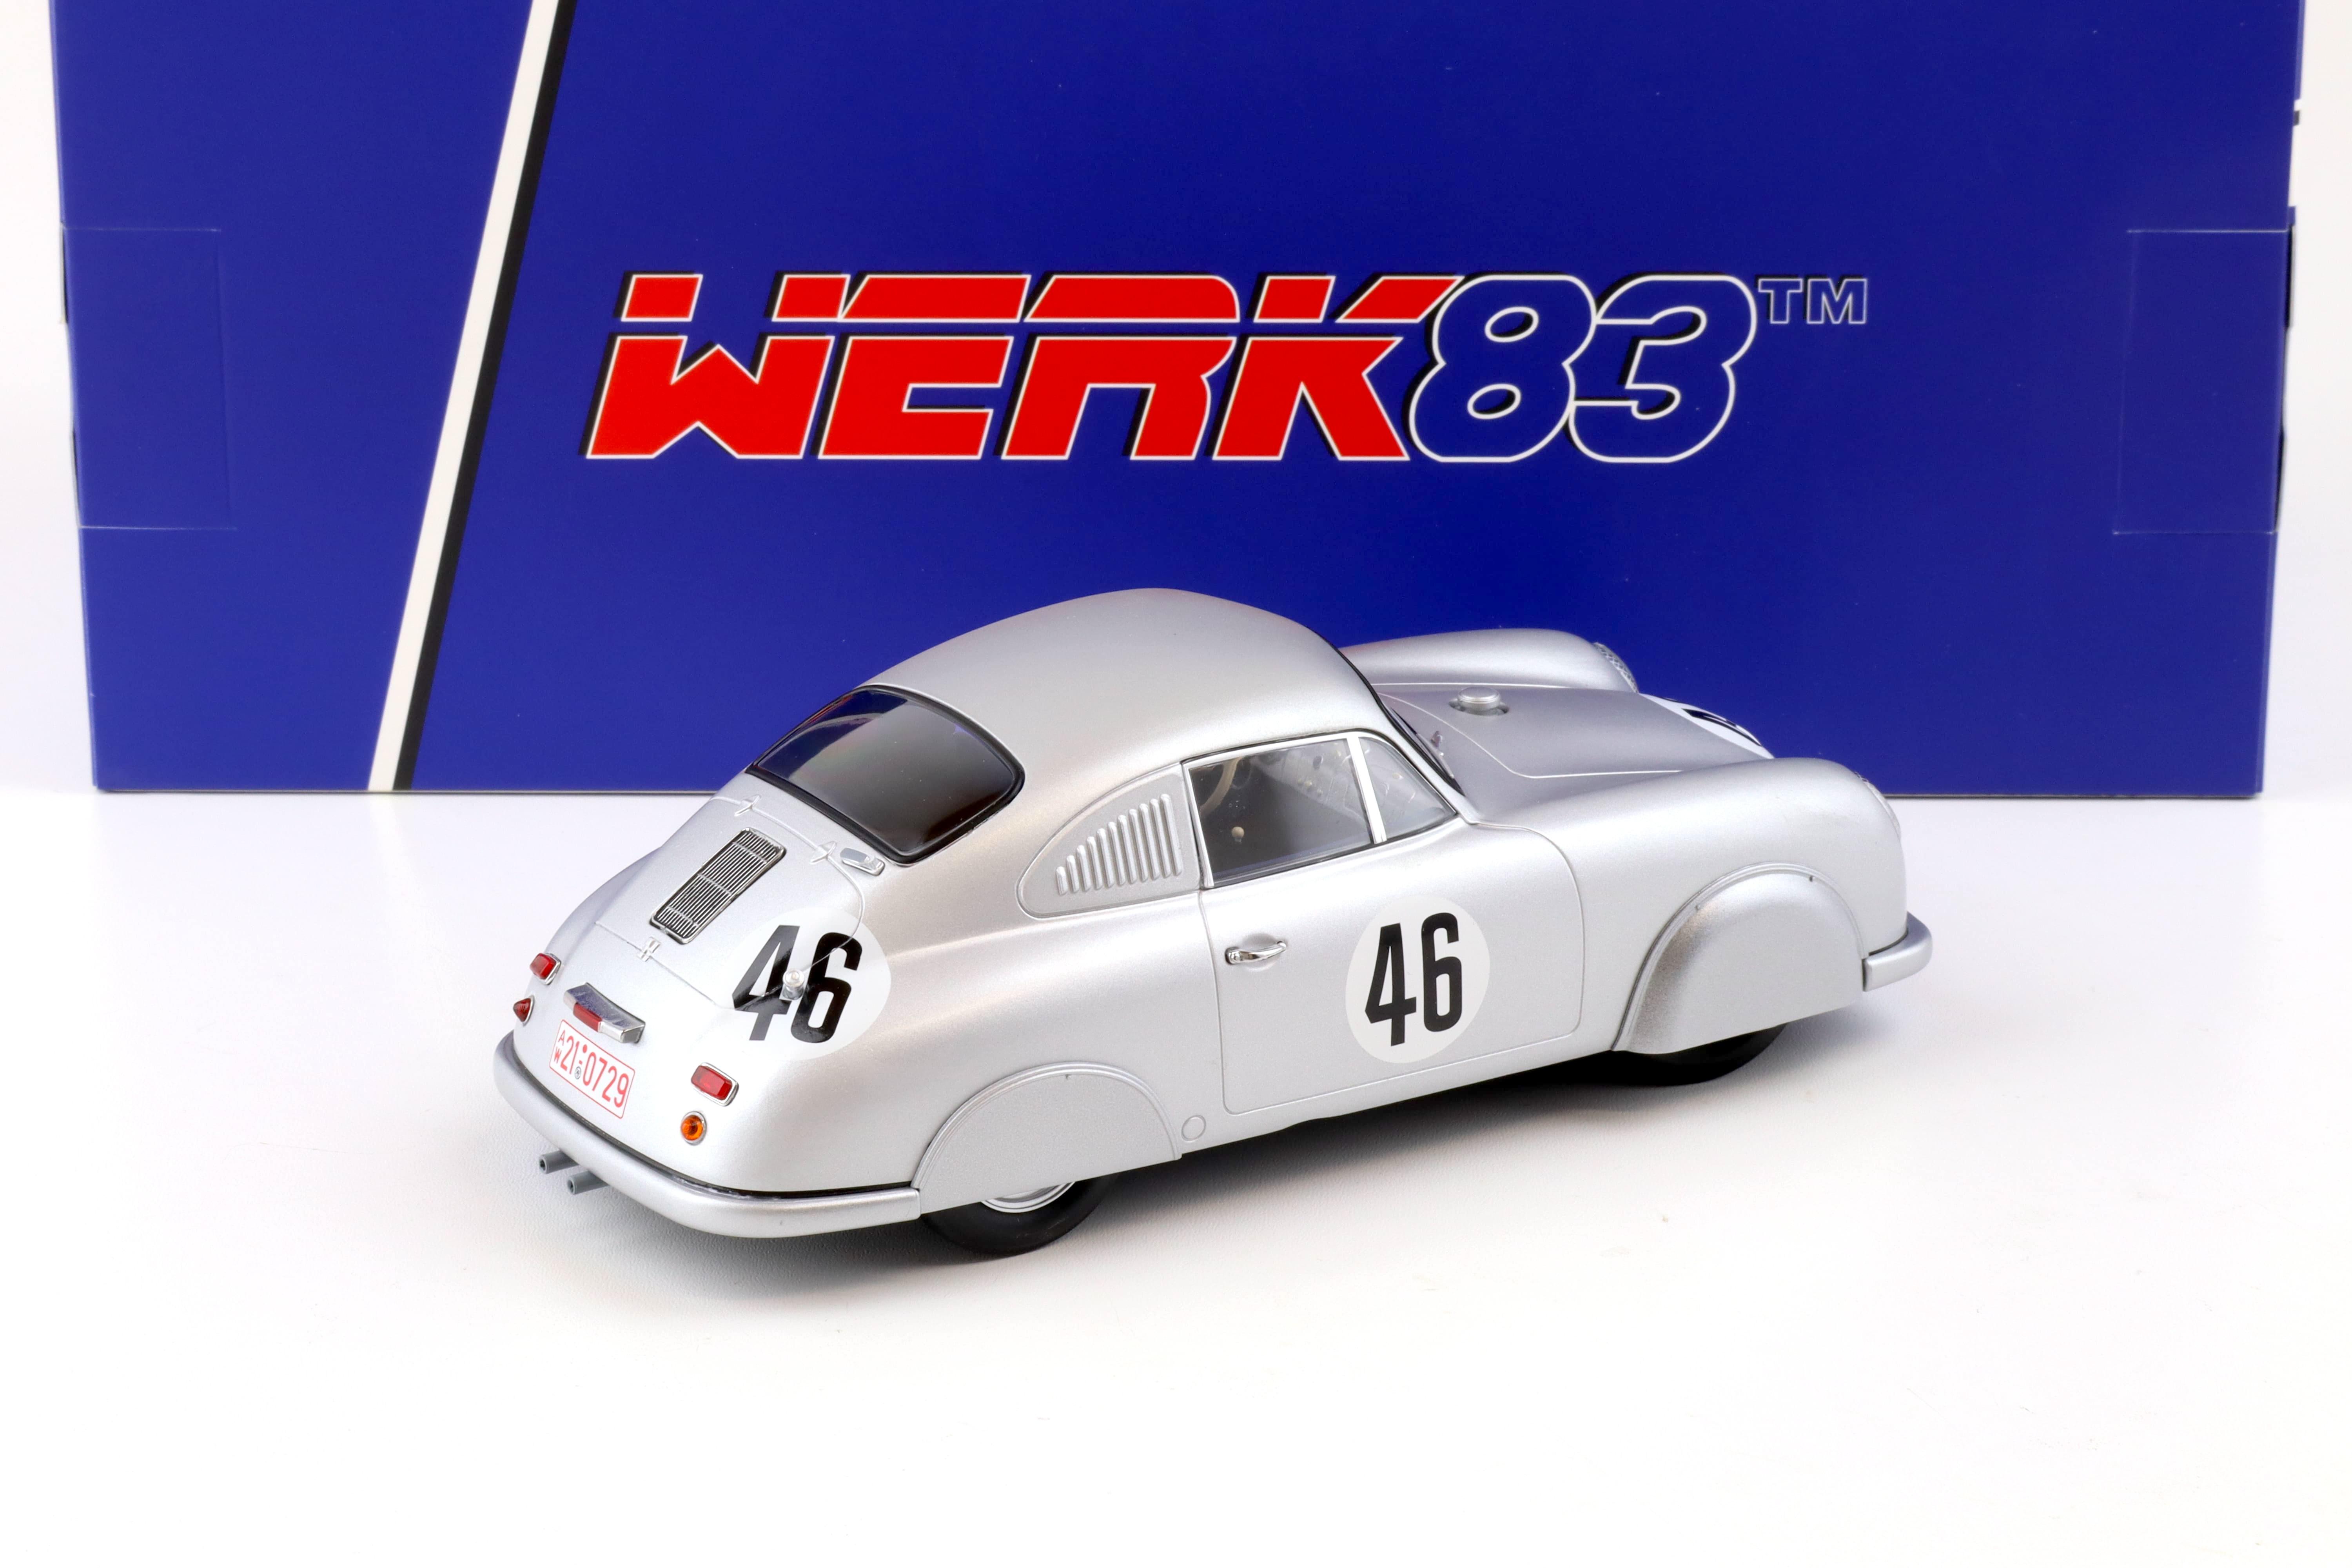 1:18 Werk83 Porsche 356 SL #46 Class Winner 24h Le Mans 1951 Veuillet/ Mouche